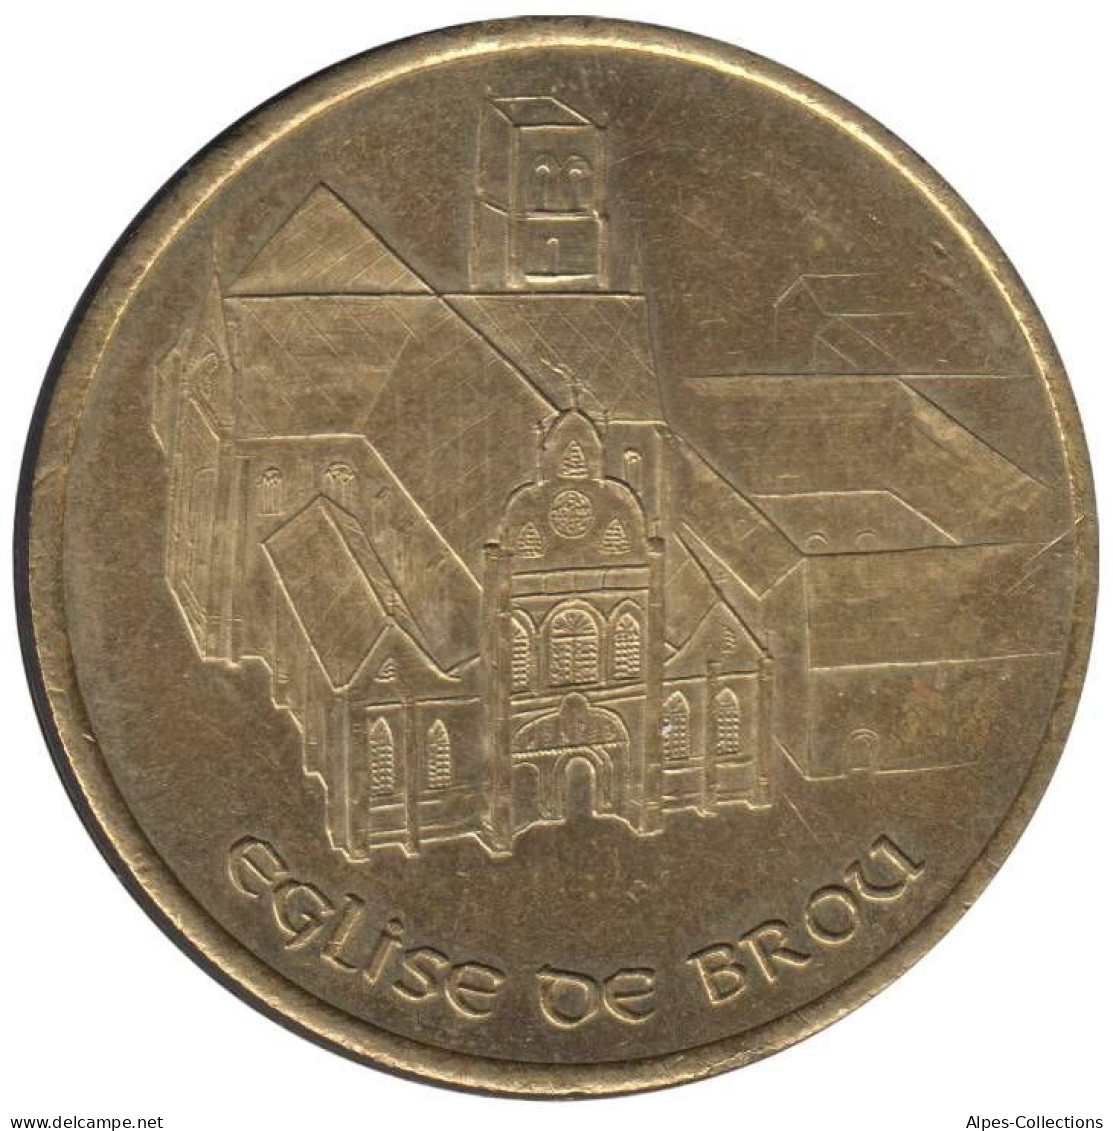 BOURG EN BRESSE - EU0010.5 - 1 EURO DES VILLES - Réf: T266 - 1997 - Euro Der Städte